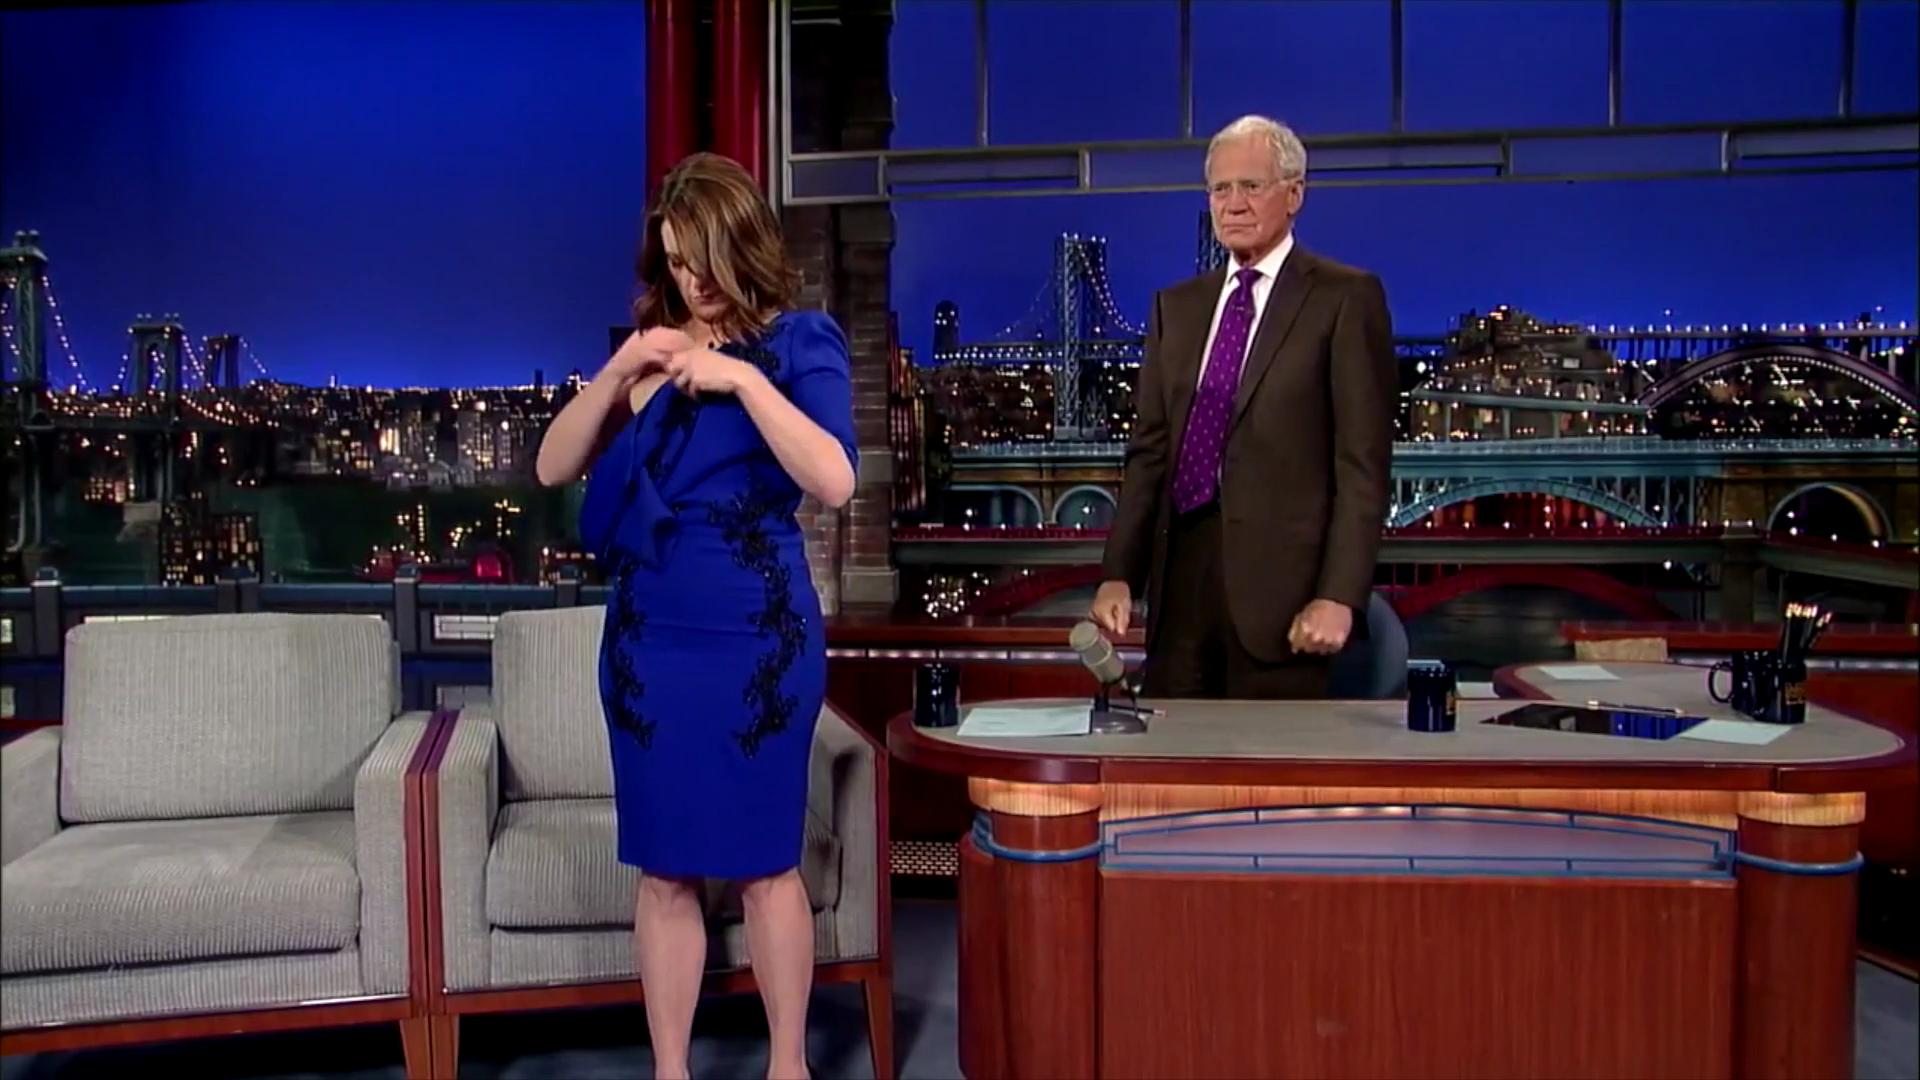 Tina Fey Bids David Letterman Good Bye With Her Last Dress Ever